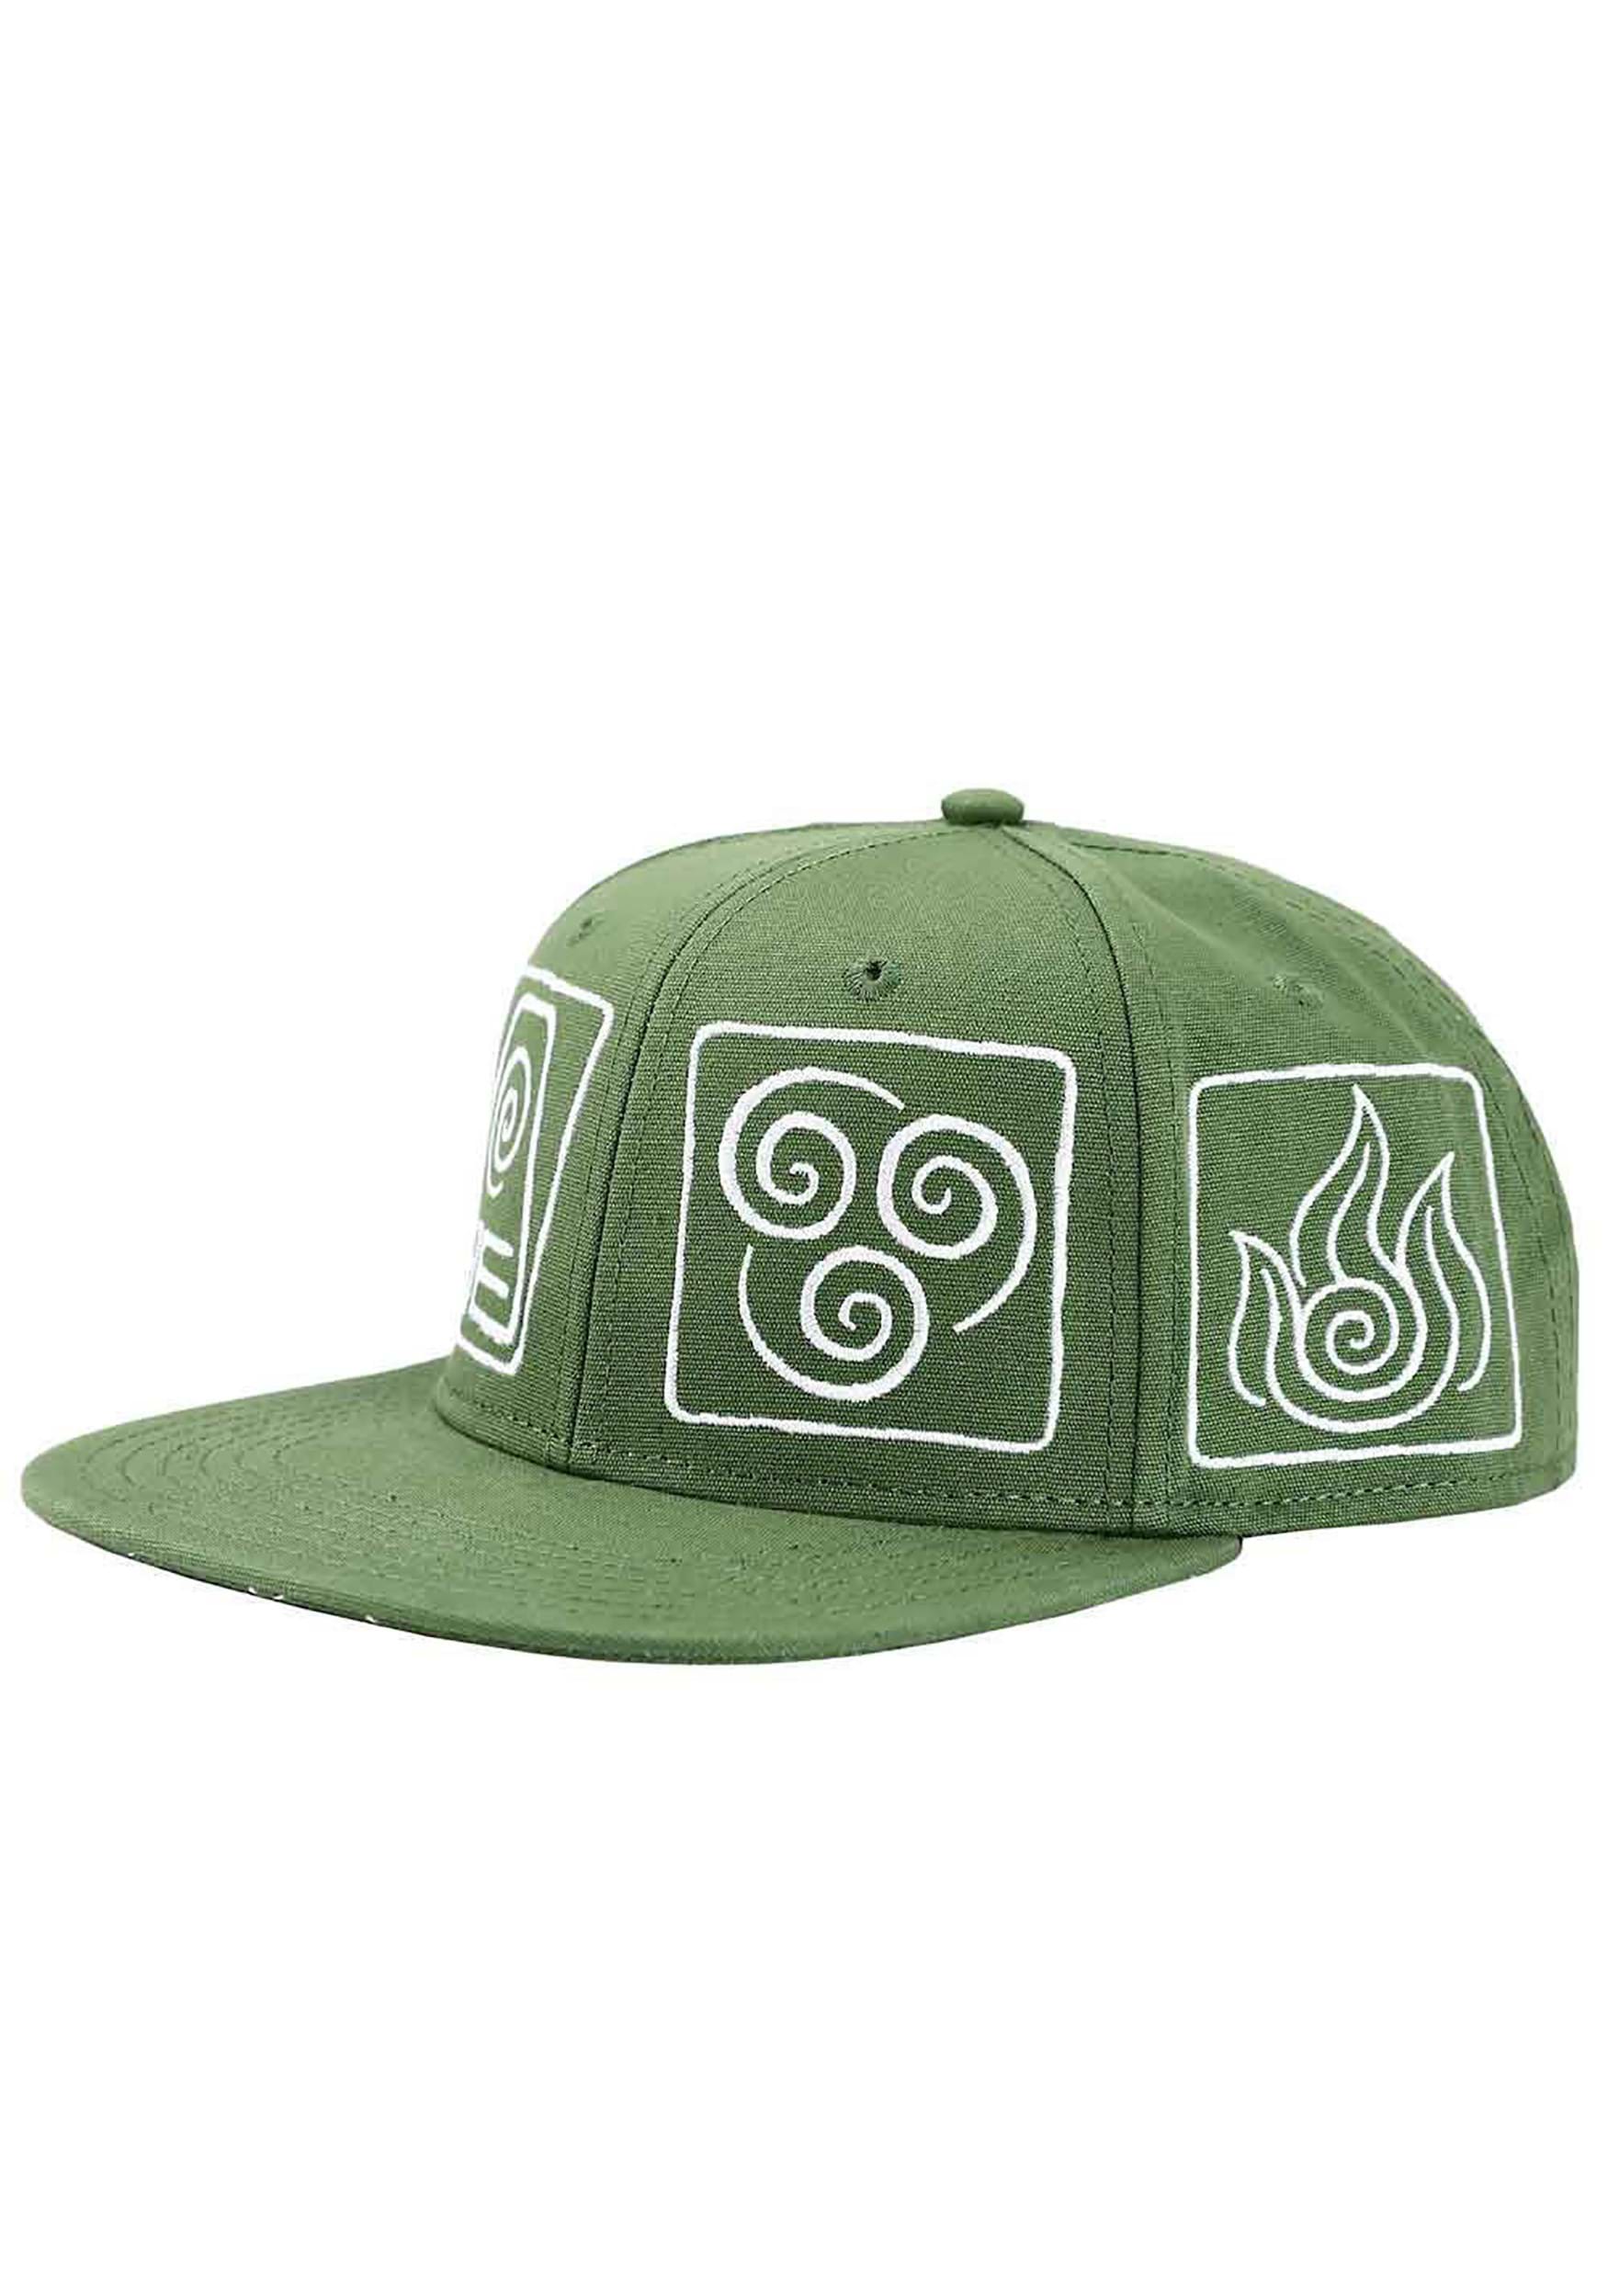 Elemental Symbols Avatar The Last Airbender Flat Bill Snapback Hat